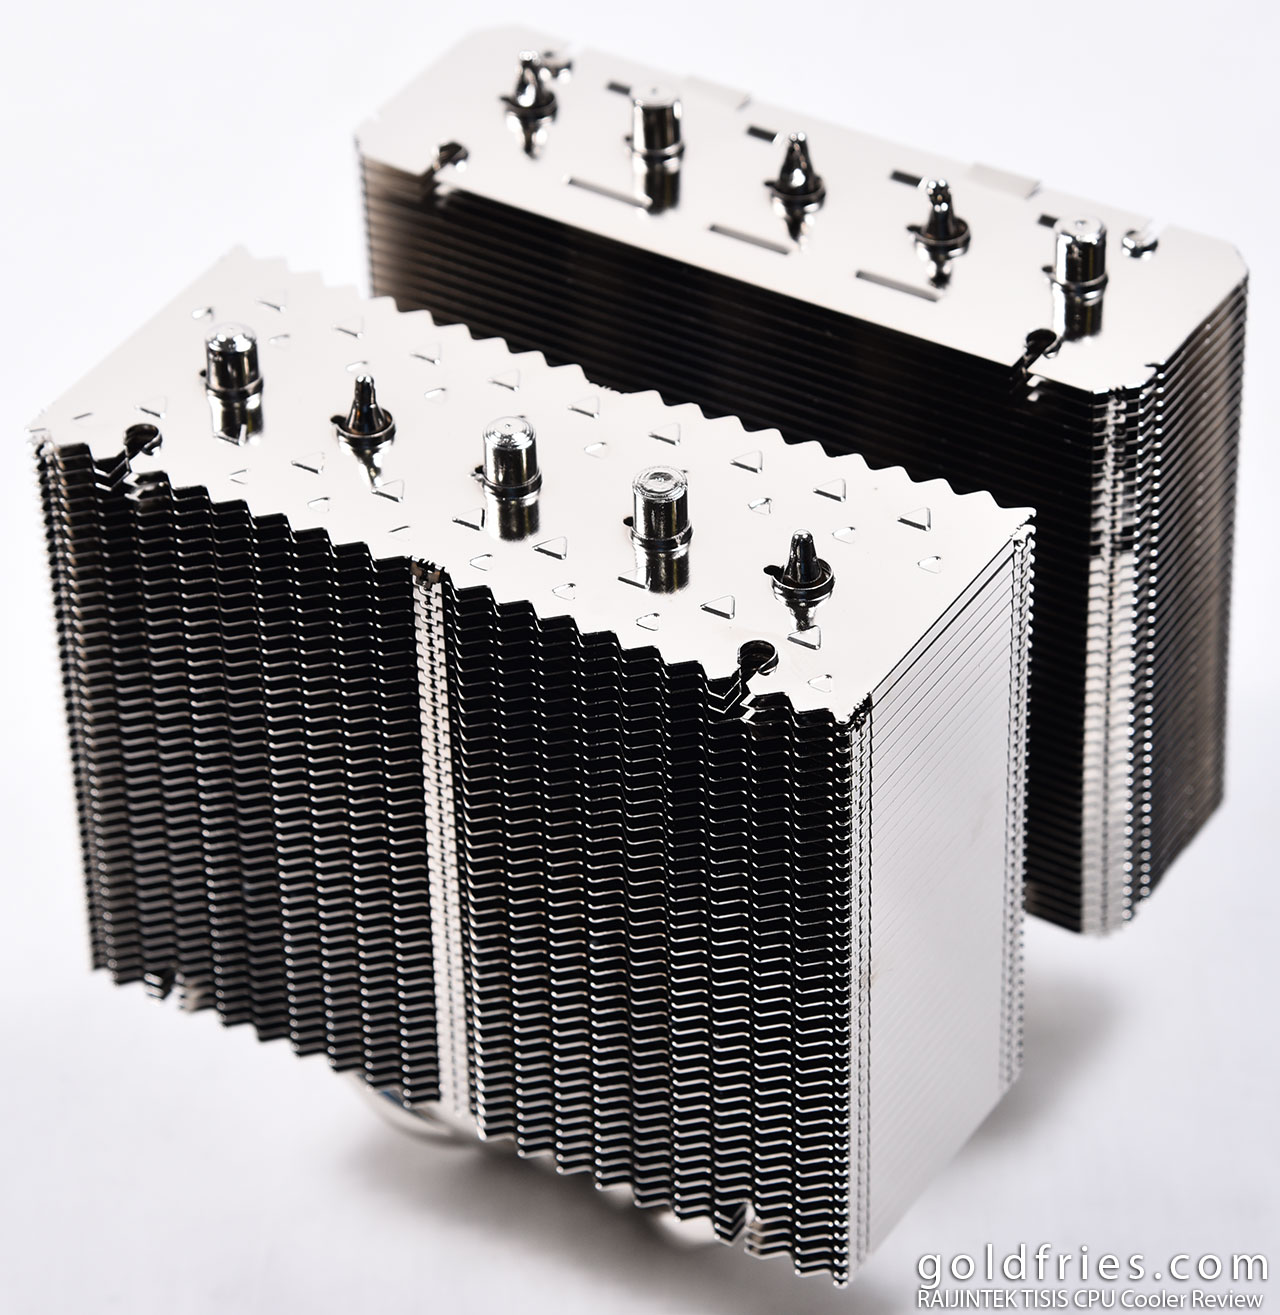 RAIJINTEK TISIS CPU Cooler Review